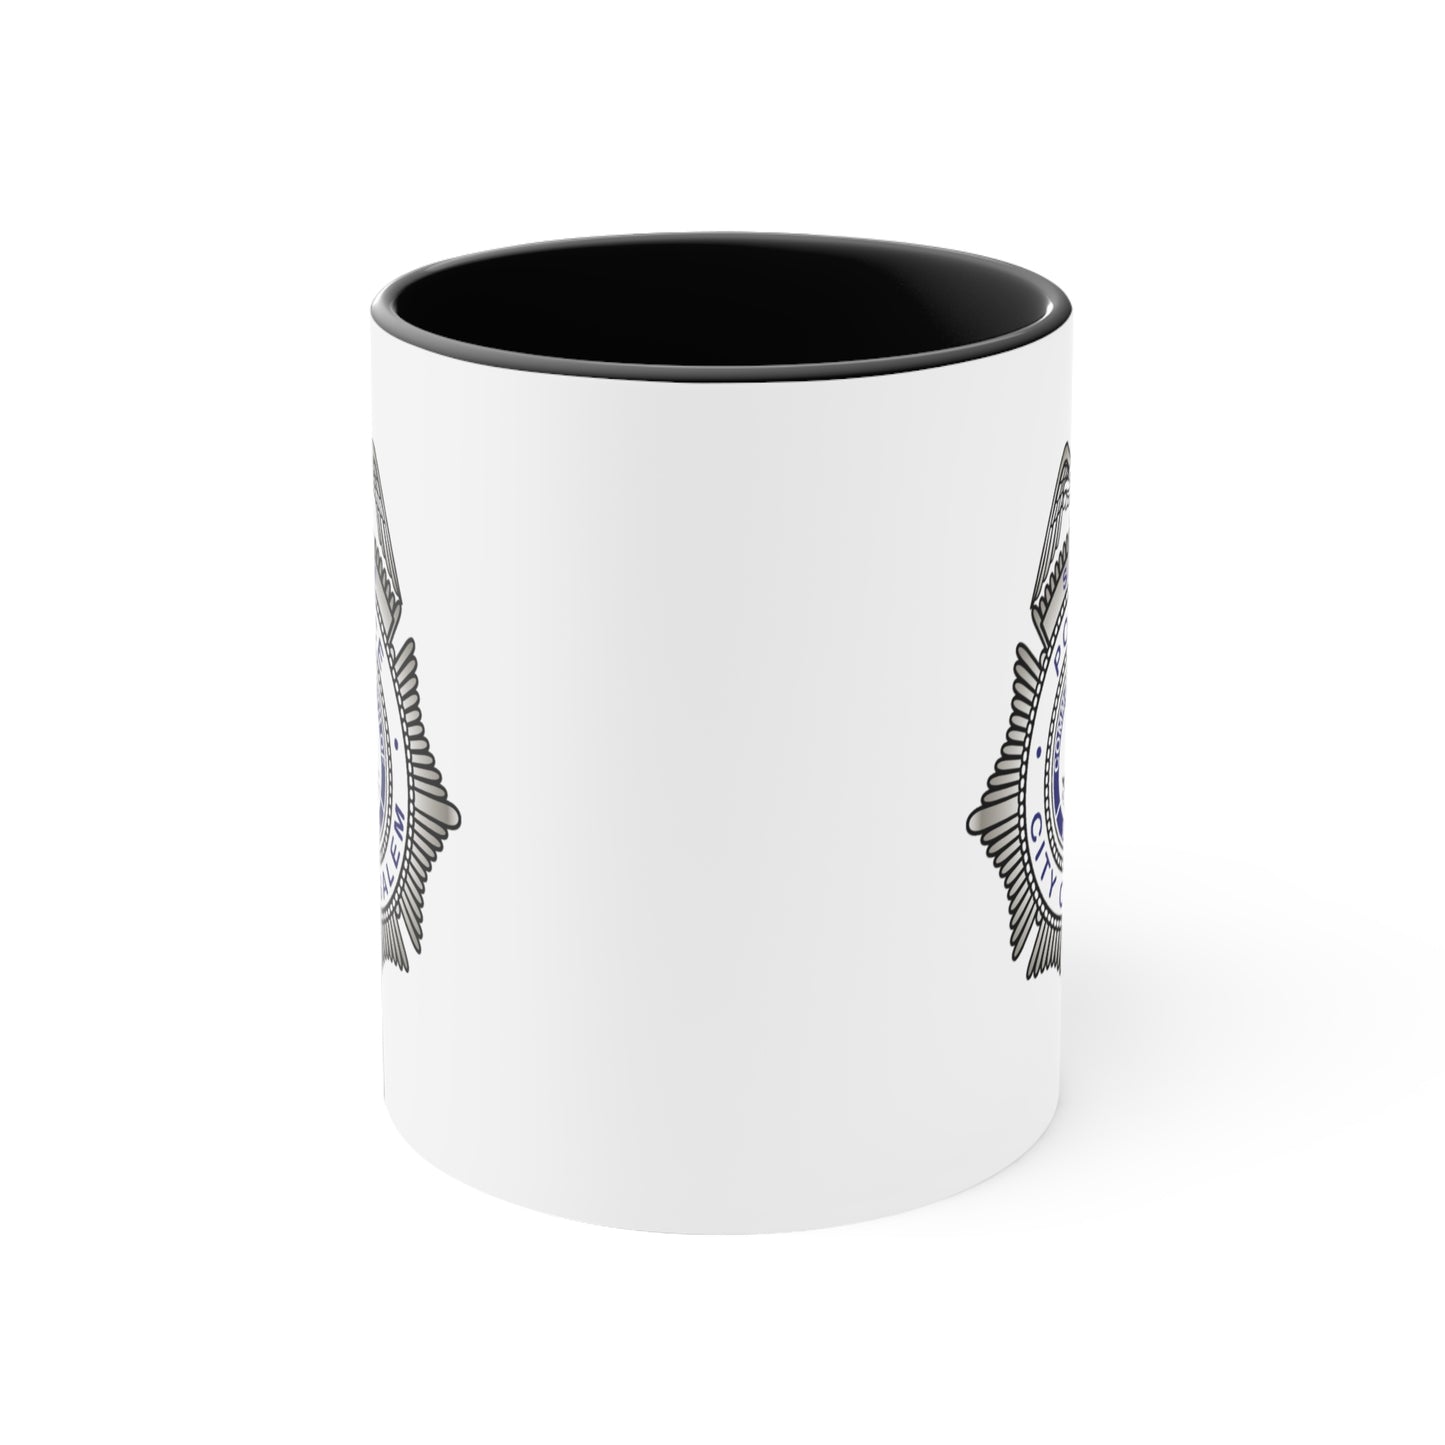 Salem Police Coffee Mug - Double Sided Black Accent White Ceramic 11oz by TheGlassyLass.com